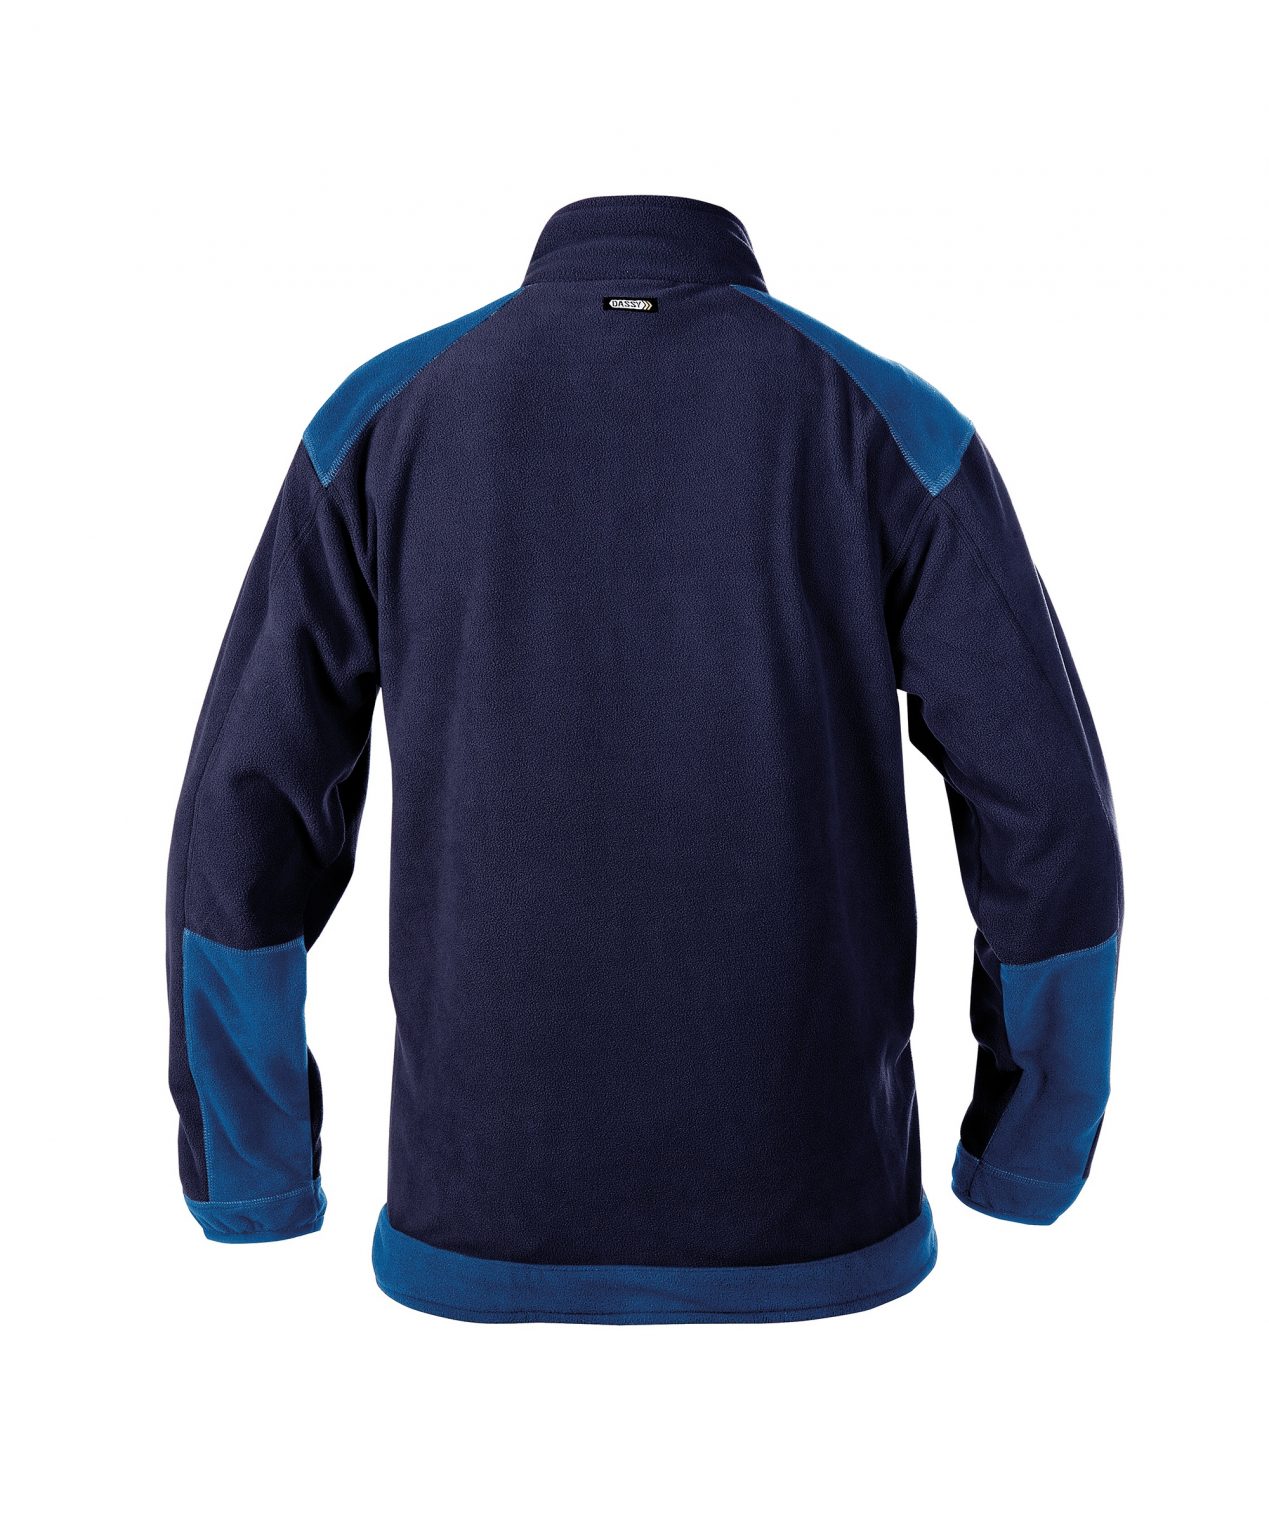 kazan two tone fleece jacket navy royal blue back